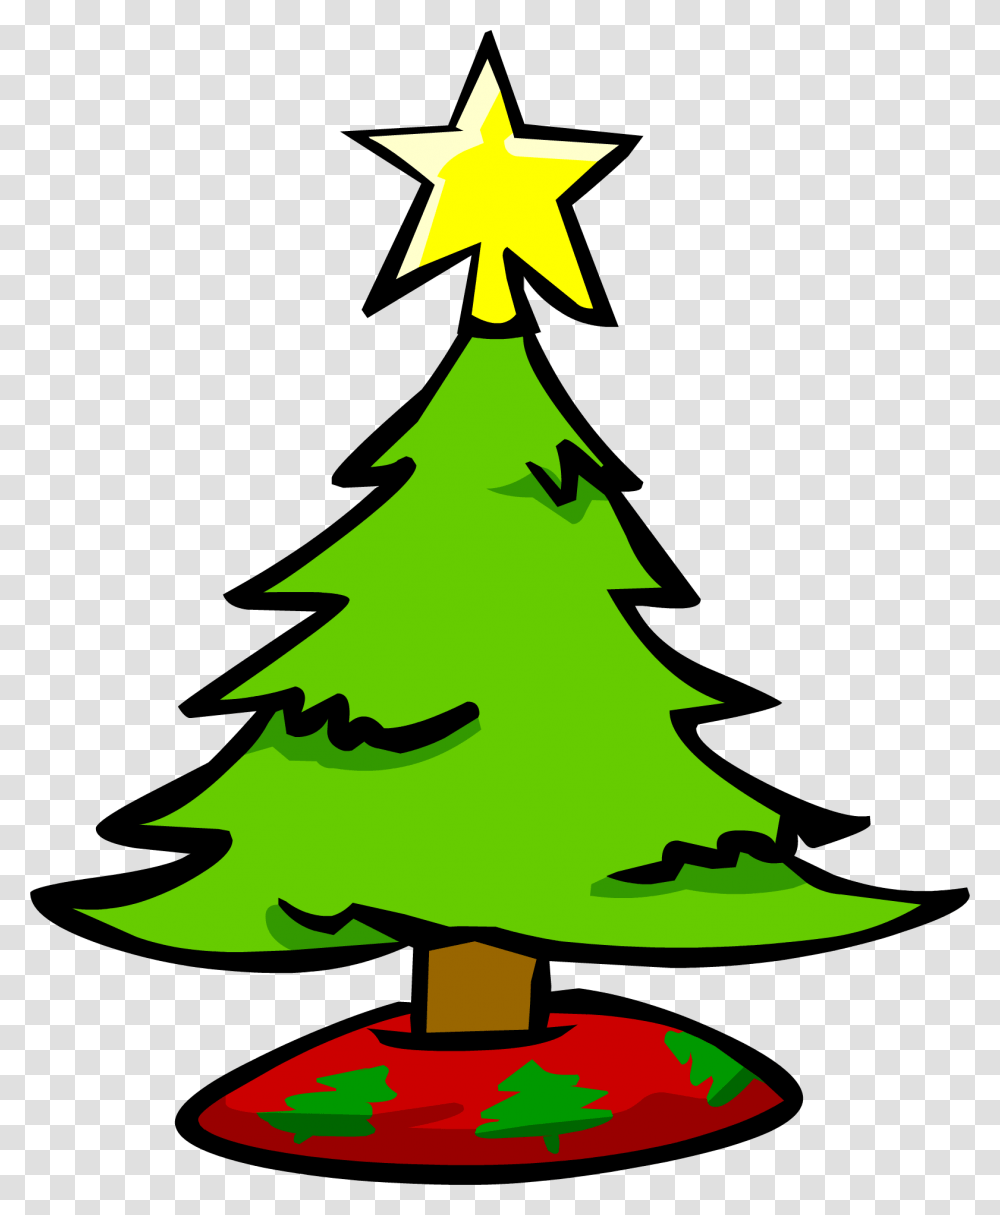 Small Christmas Tree Club Penguin Wiki Fandom Christmas Tree Image Small, Plant, Symbol, Ornament, Star Symbol Transparent Png